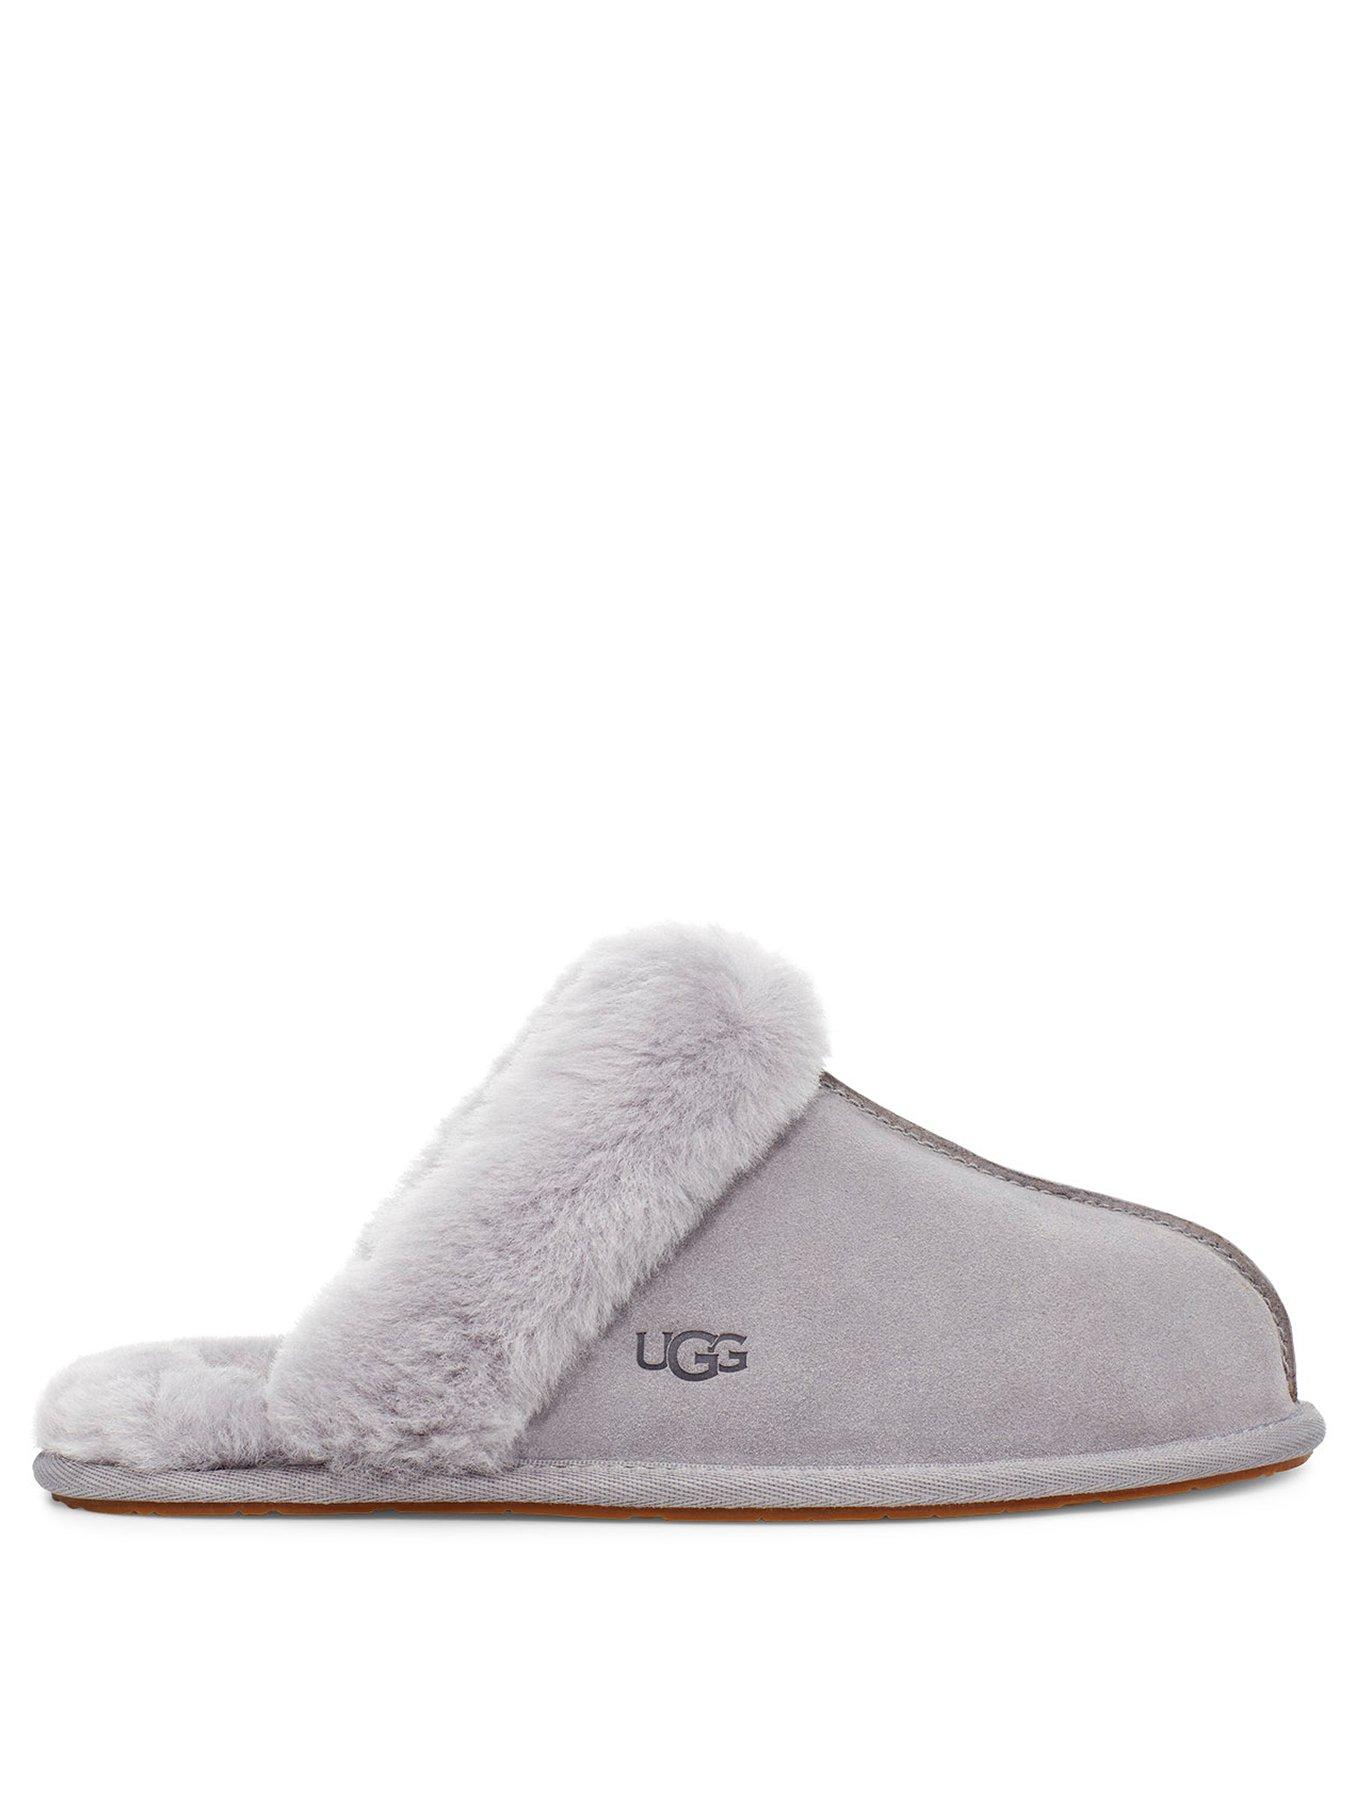 light grey ugg slippers 